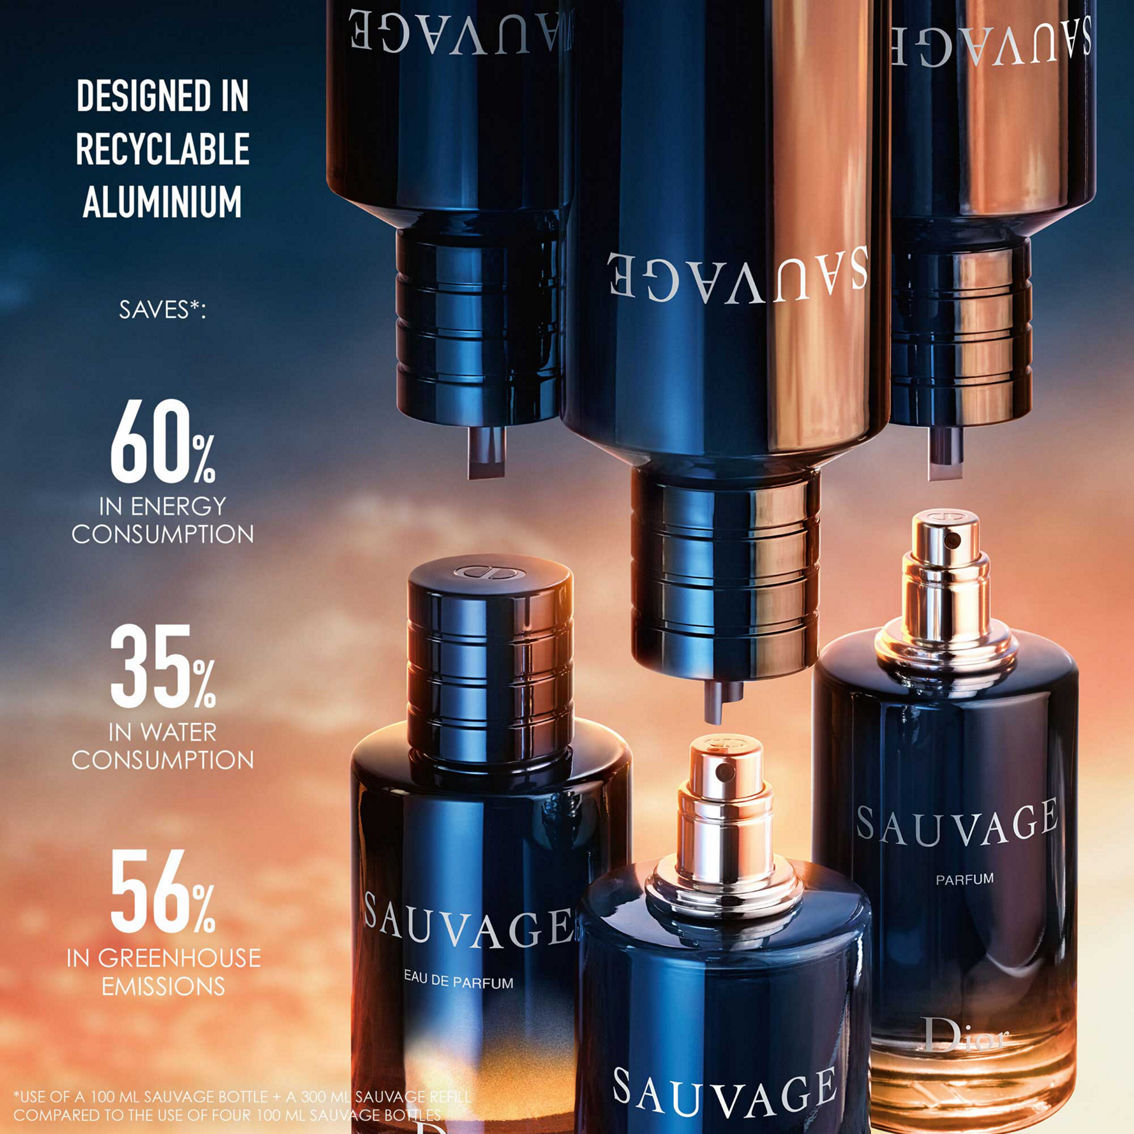 Dior Sauvage Eau de Parfum - Image 3 of 5